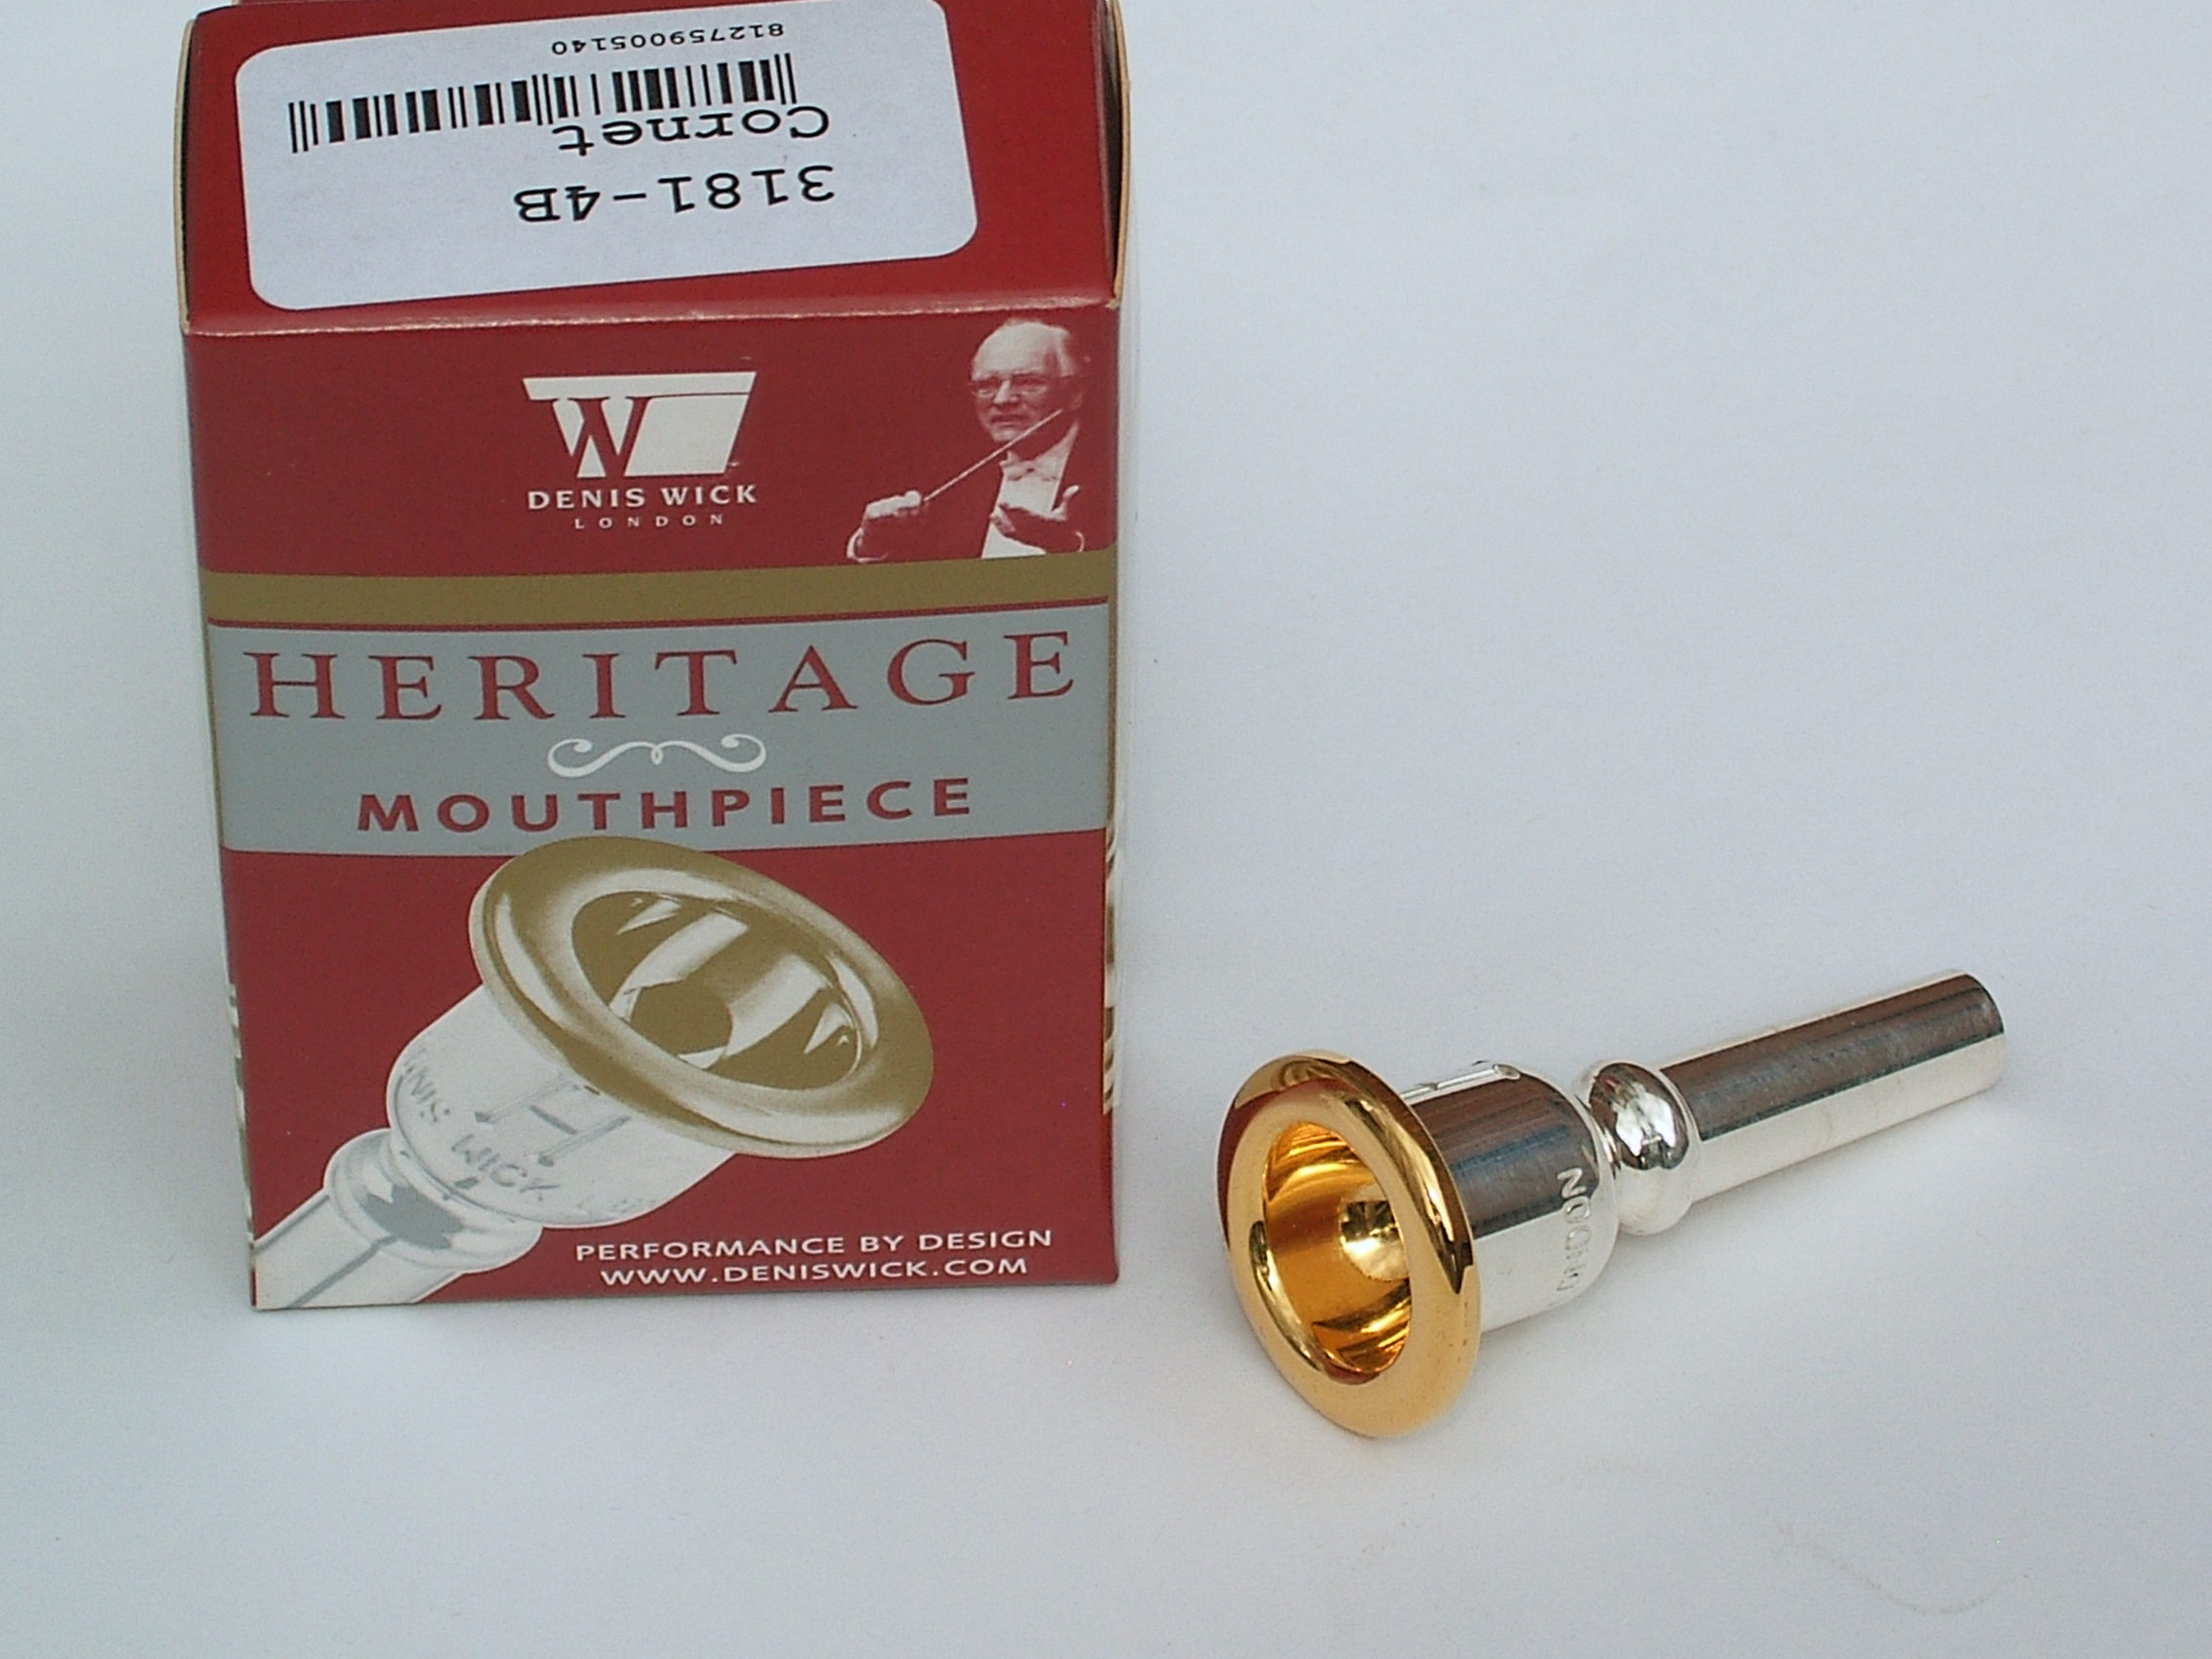 Denis Wick "Heritage" Model Cornet Mouthpiece